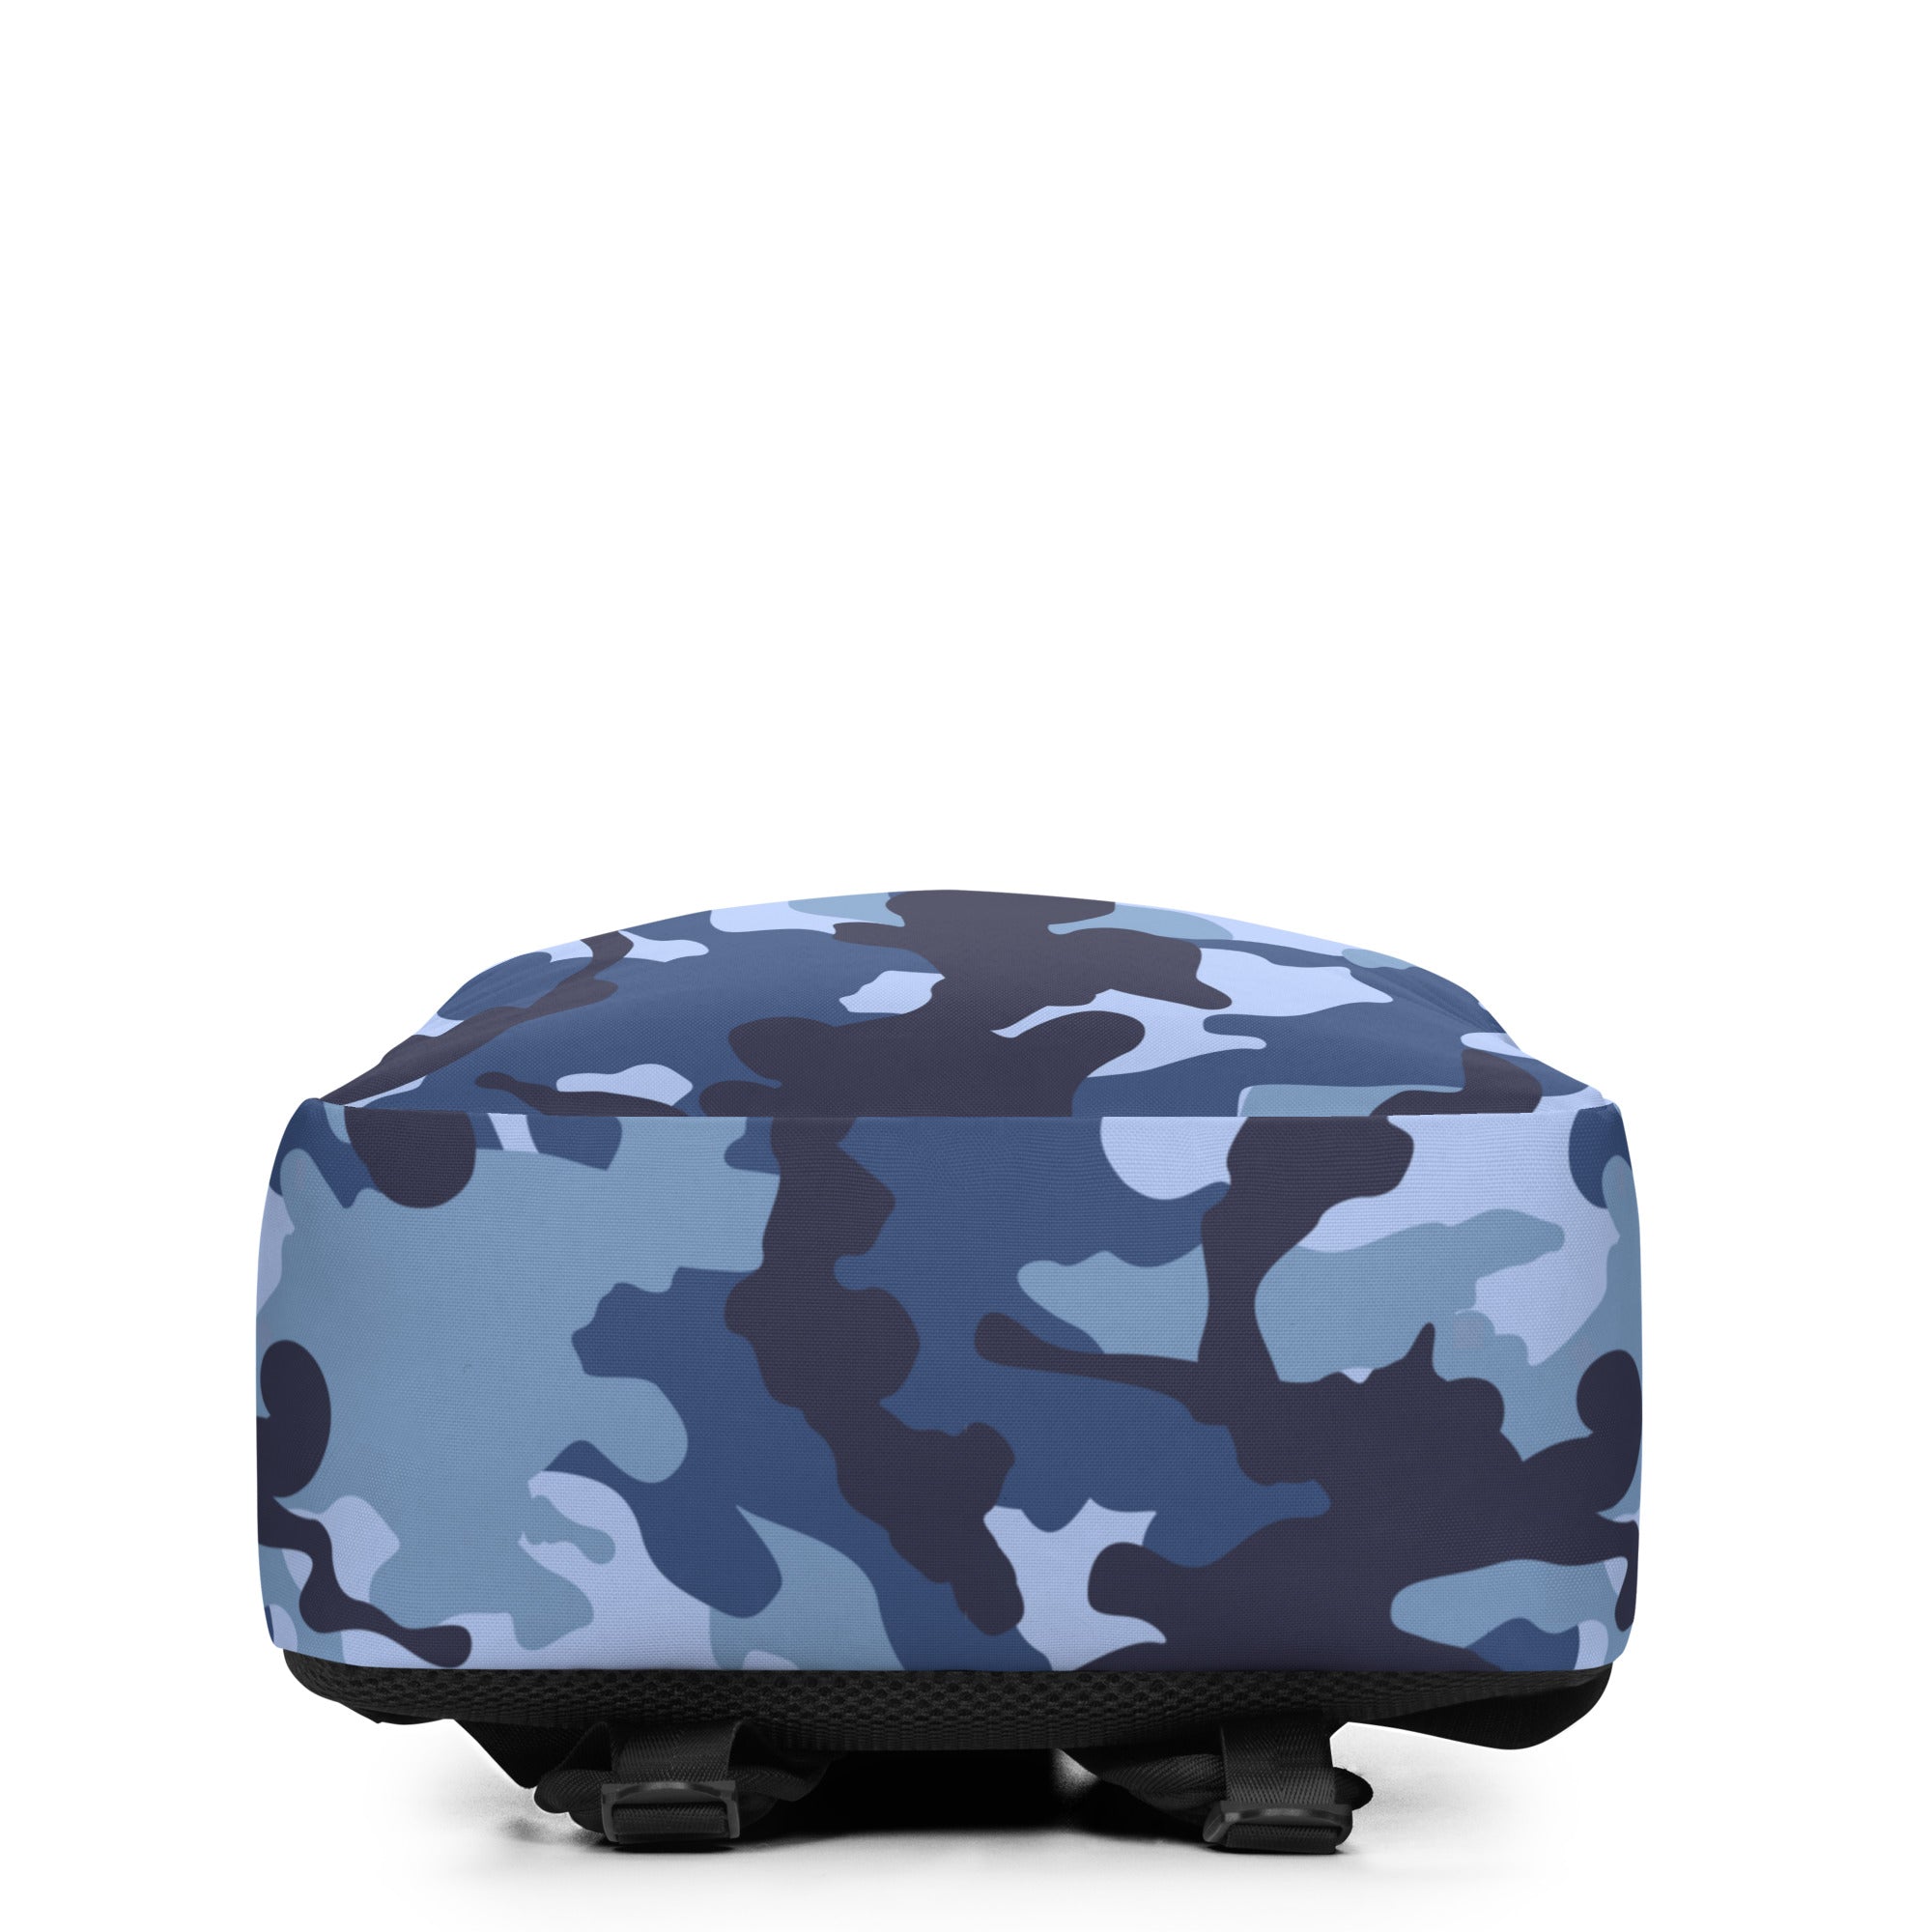 Minimalist Backpack- Camo Blue And Black